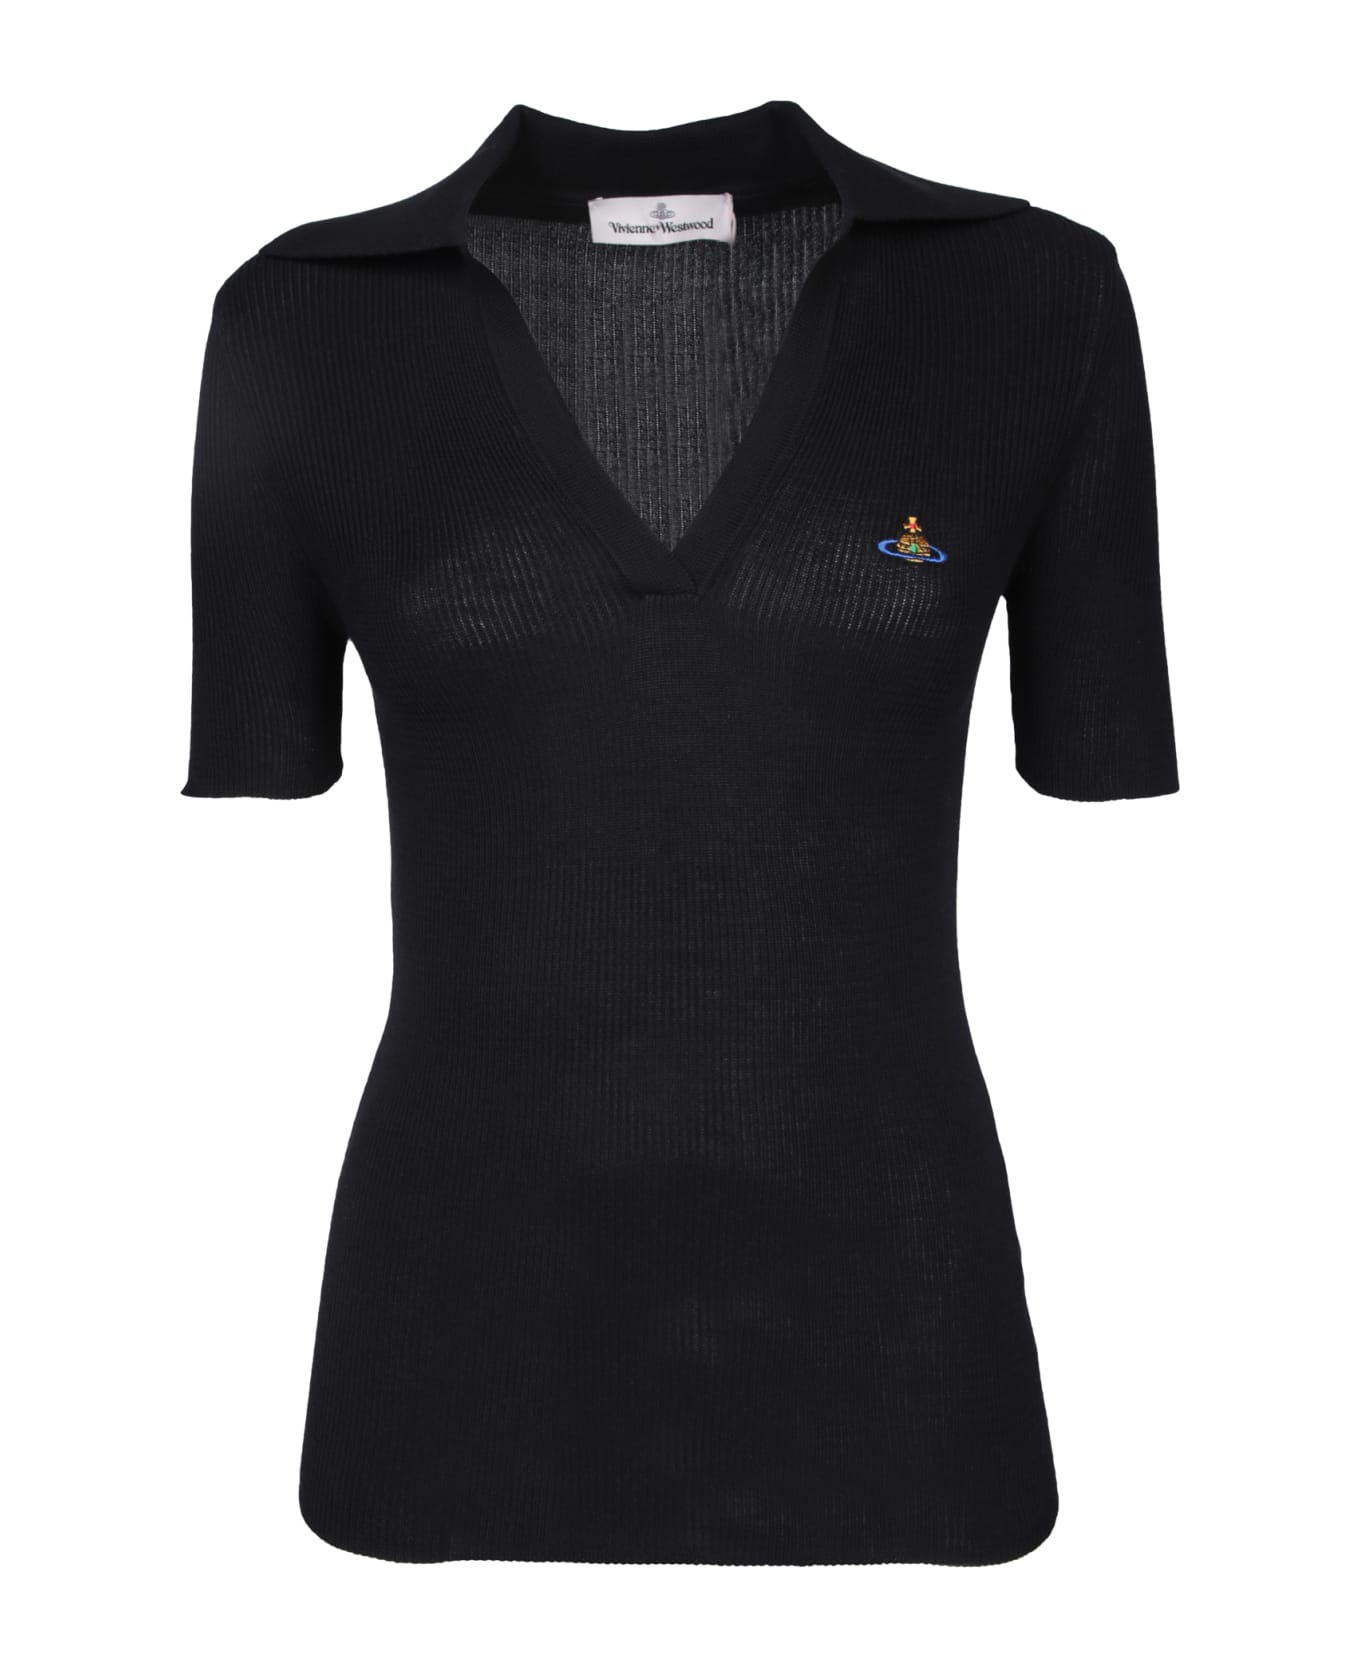 Vivienne Westwood Marina Black Polo Shirt - Black